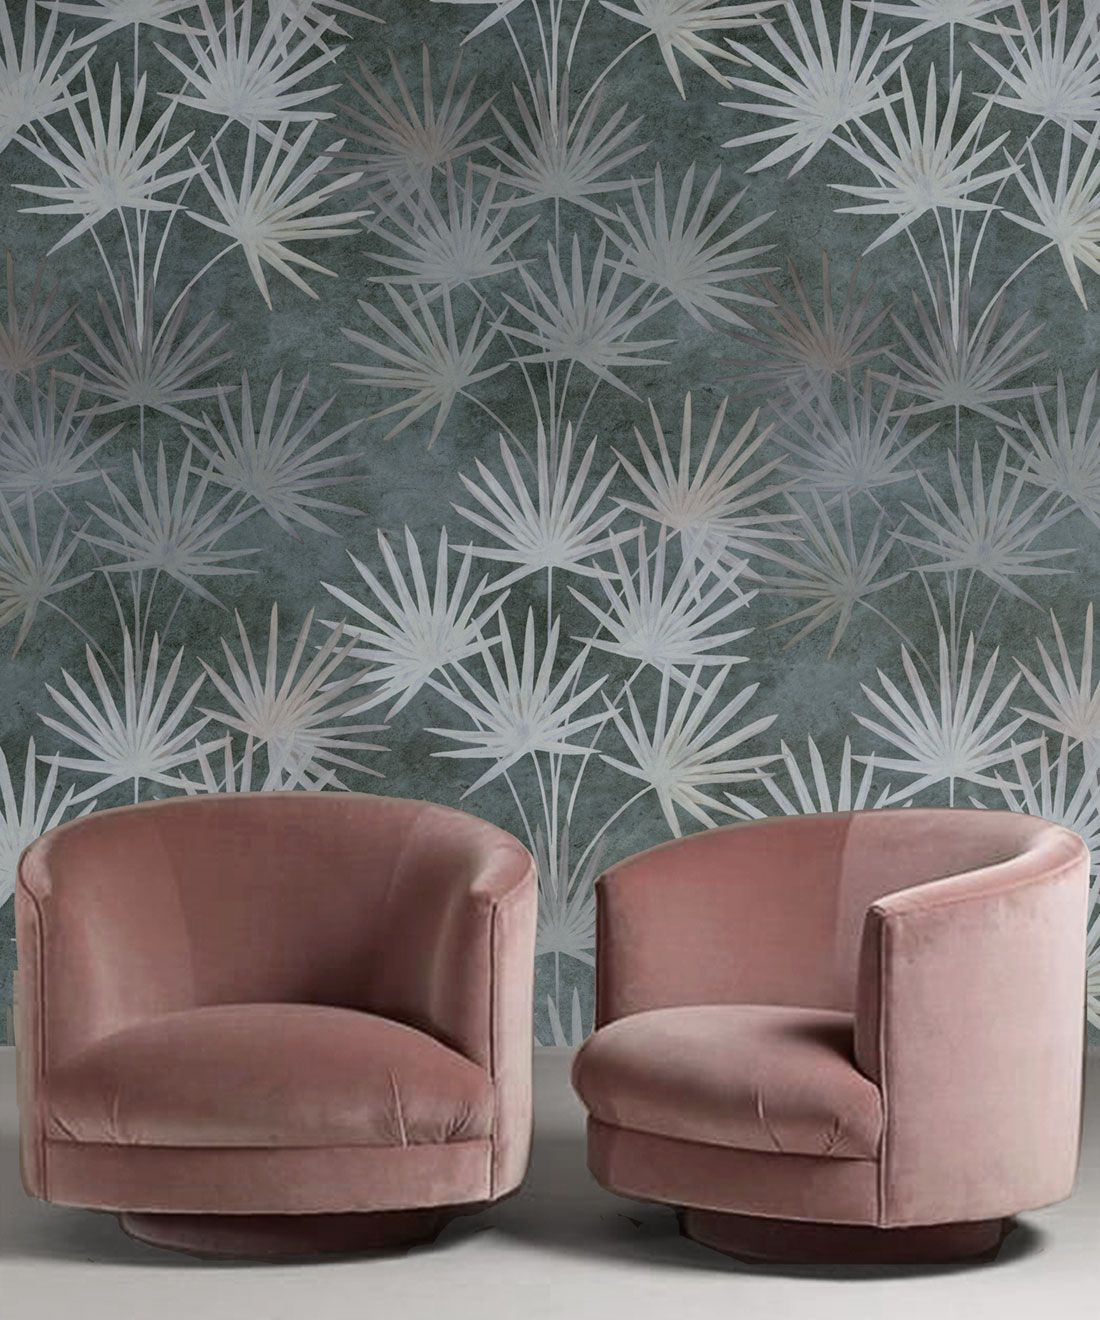 Oriental Palm Wallpaper (Two Roll Set)